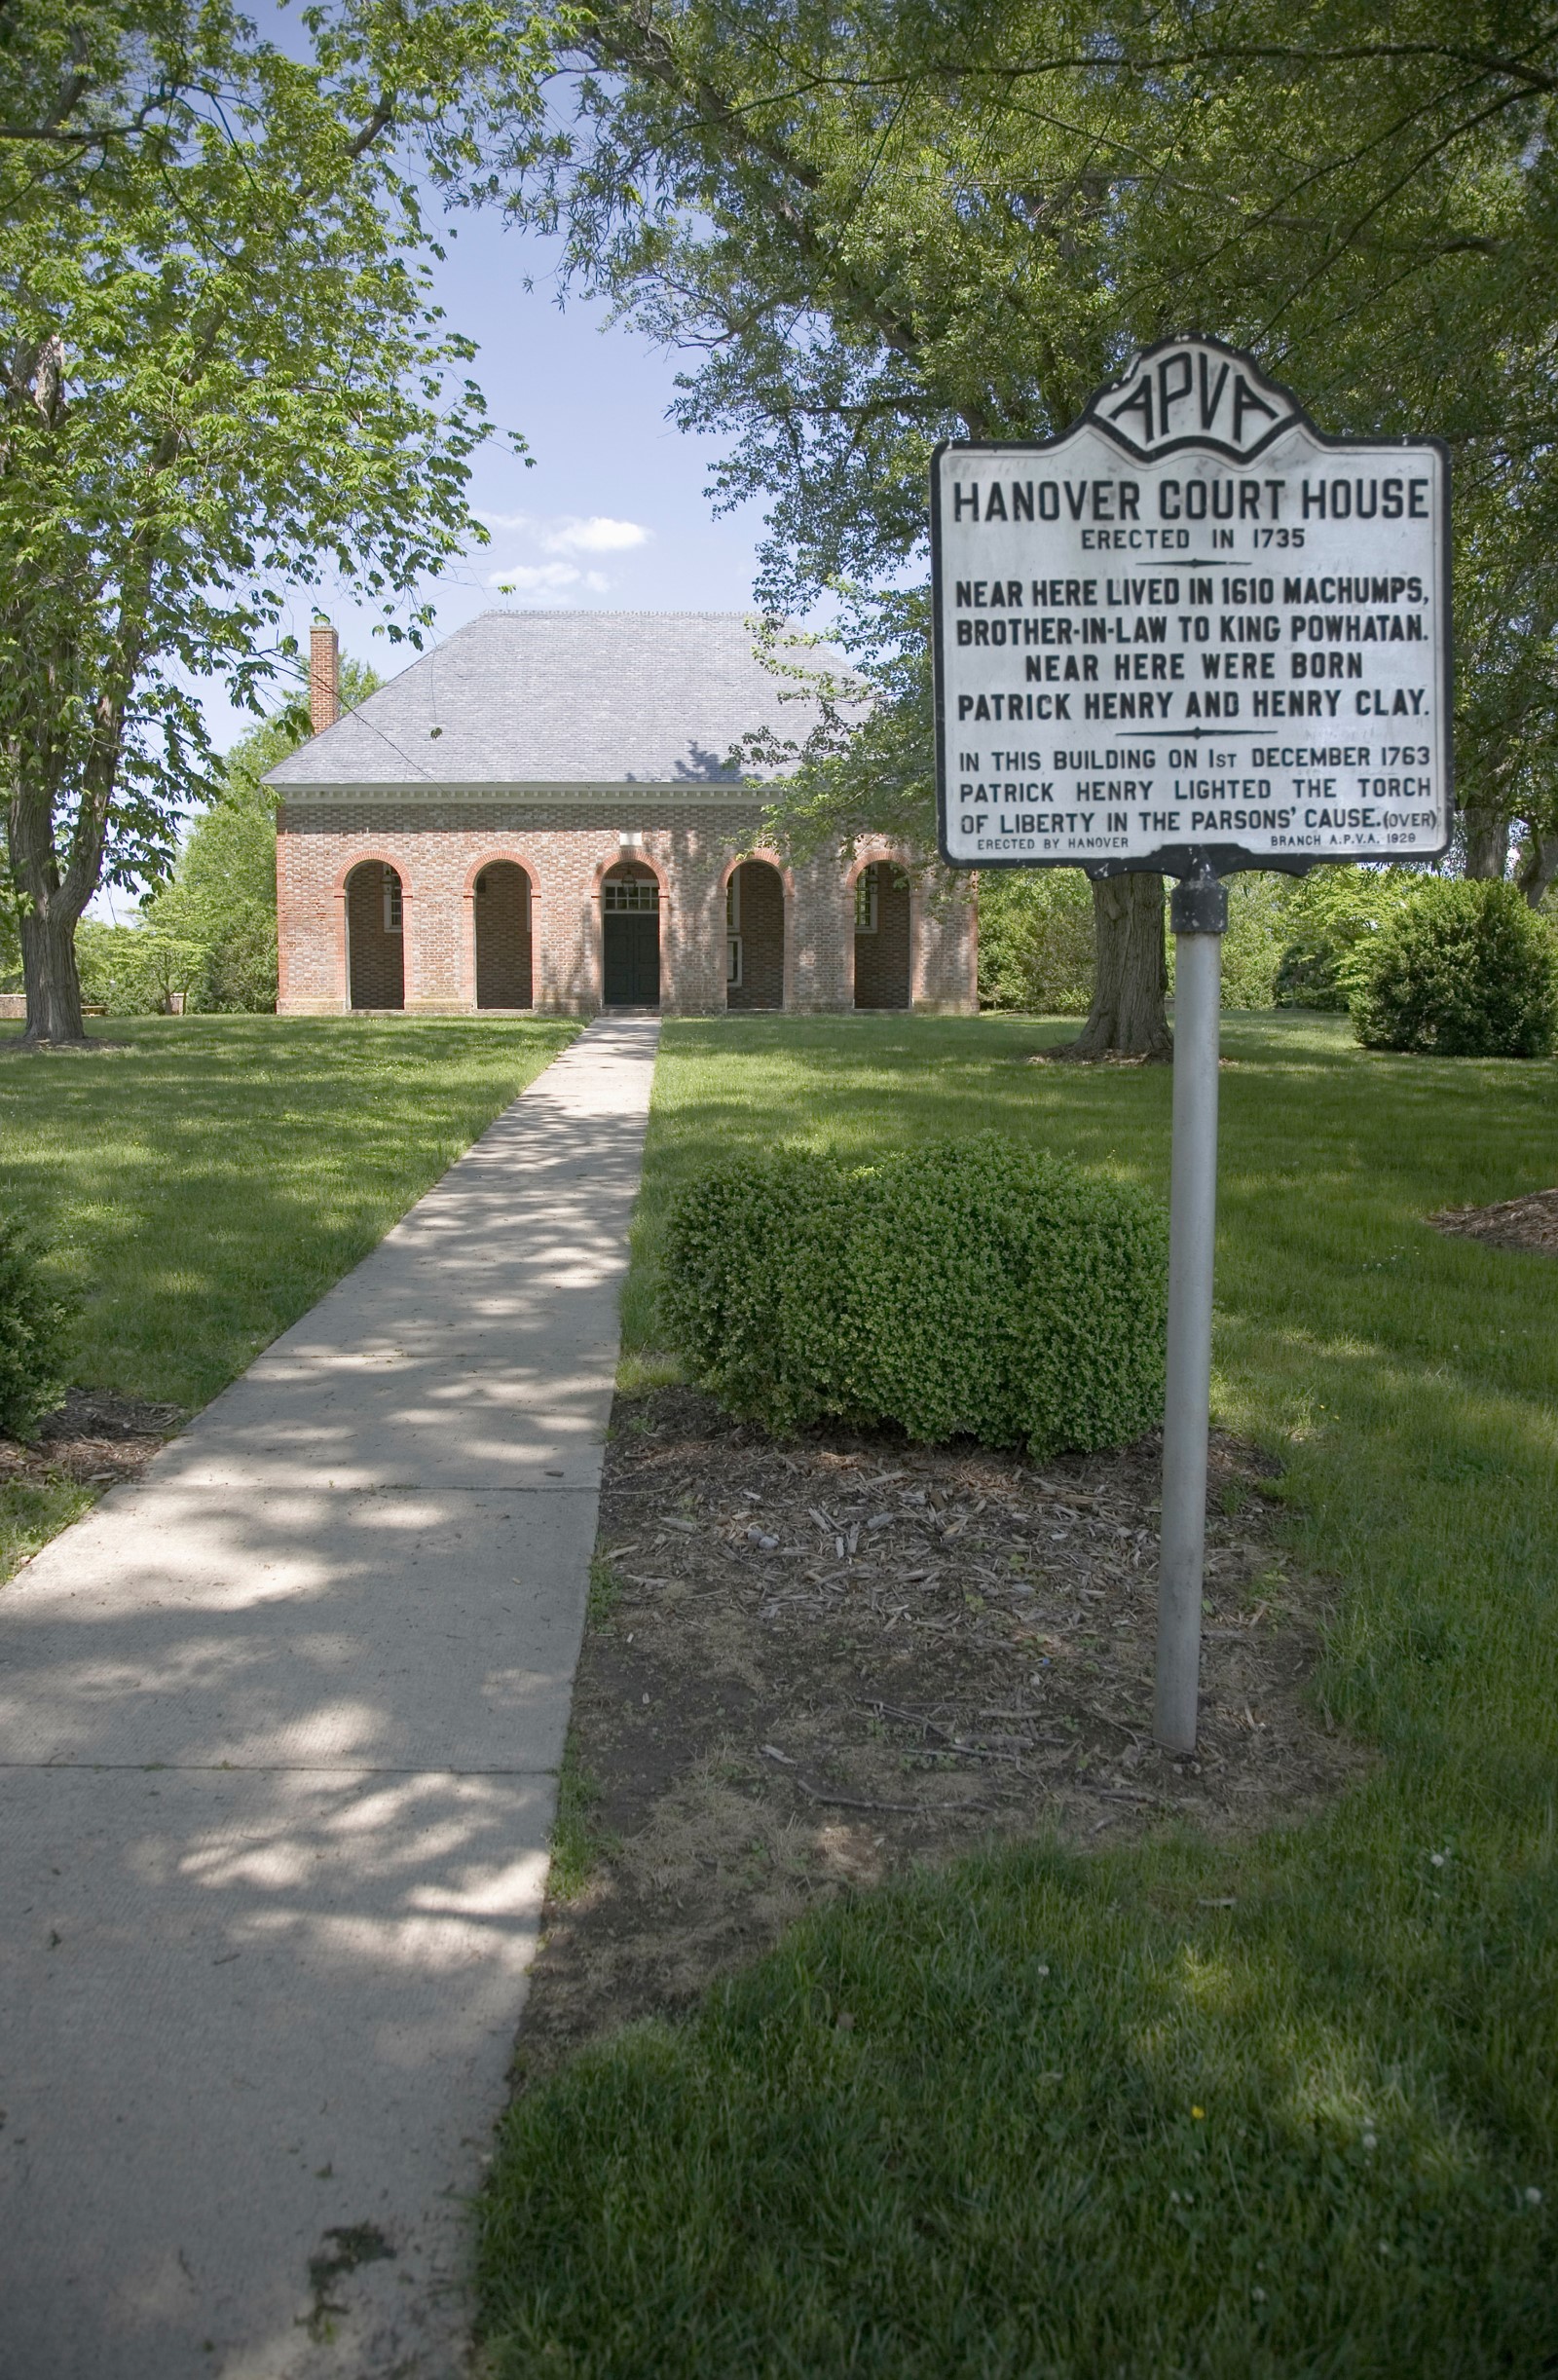 Hanover Court House, in Hanover County Virginia.